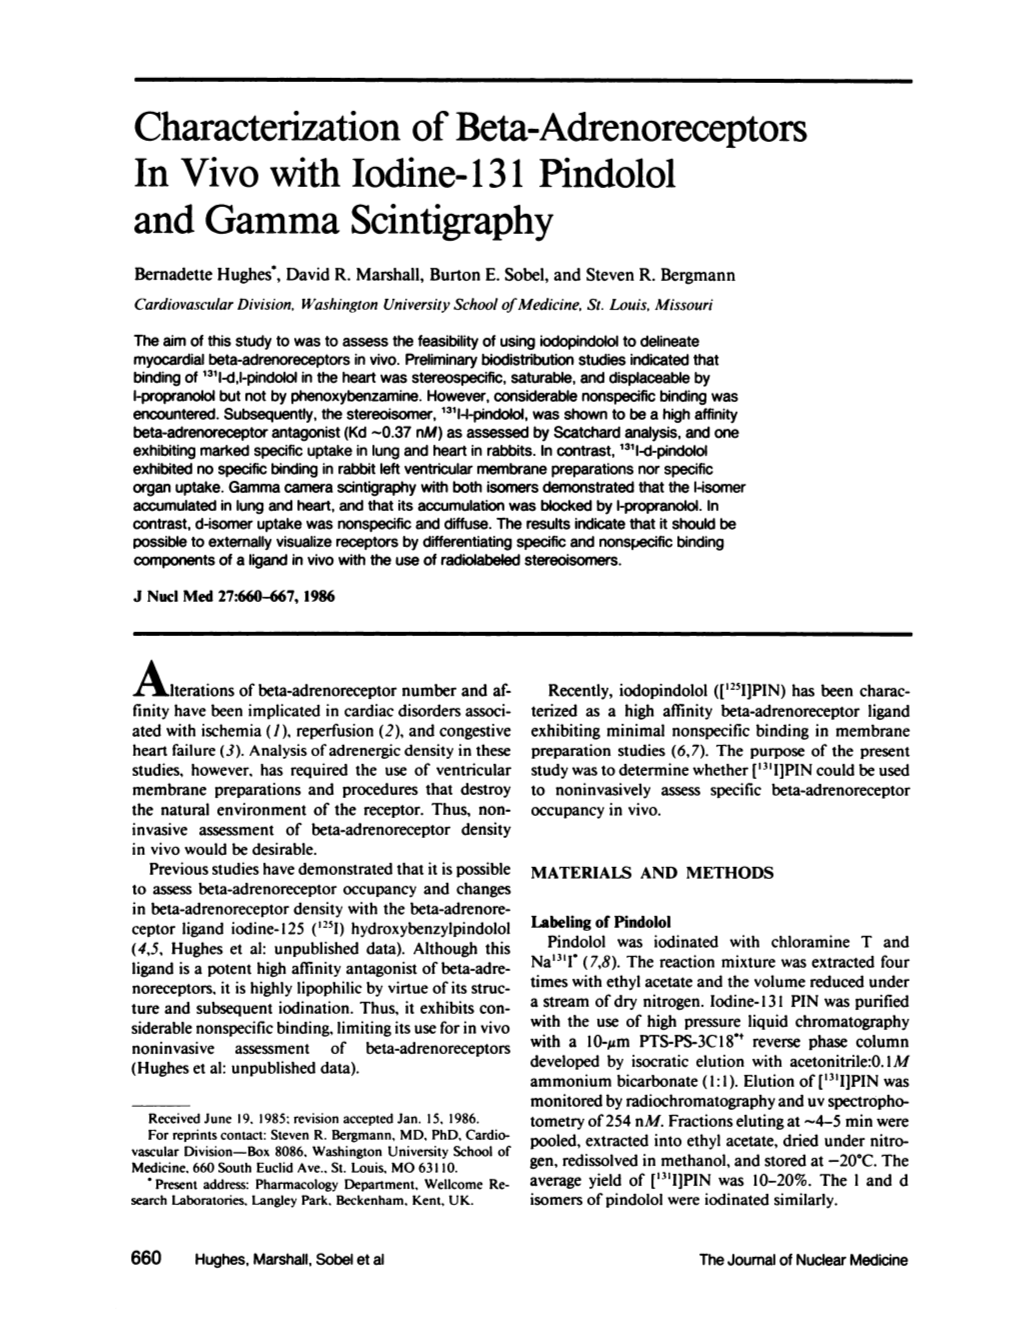 Characterization of Beta-Adrenoreceptors in Vivo with Iodine-131 Pindolol and Gamma Scintigraphy Bernadette Hughes', David R